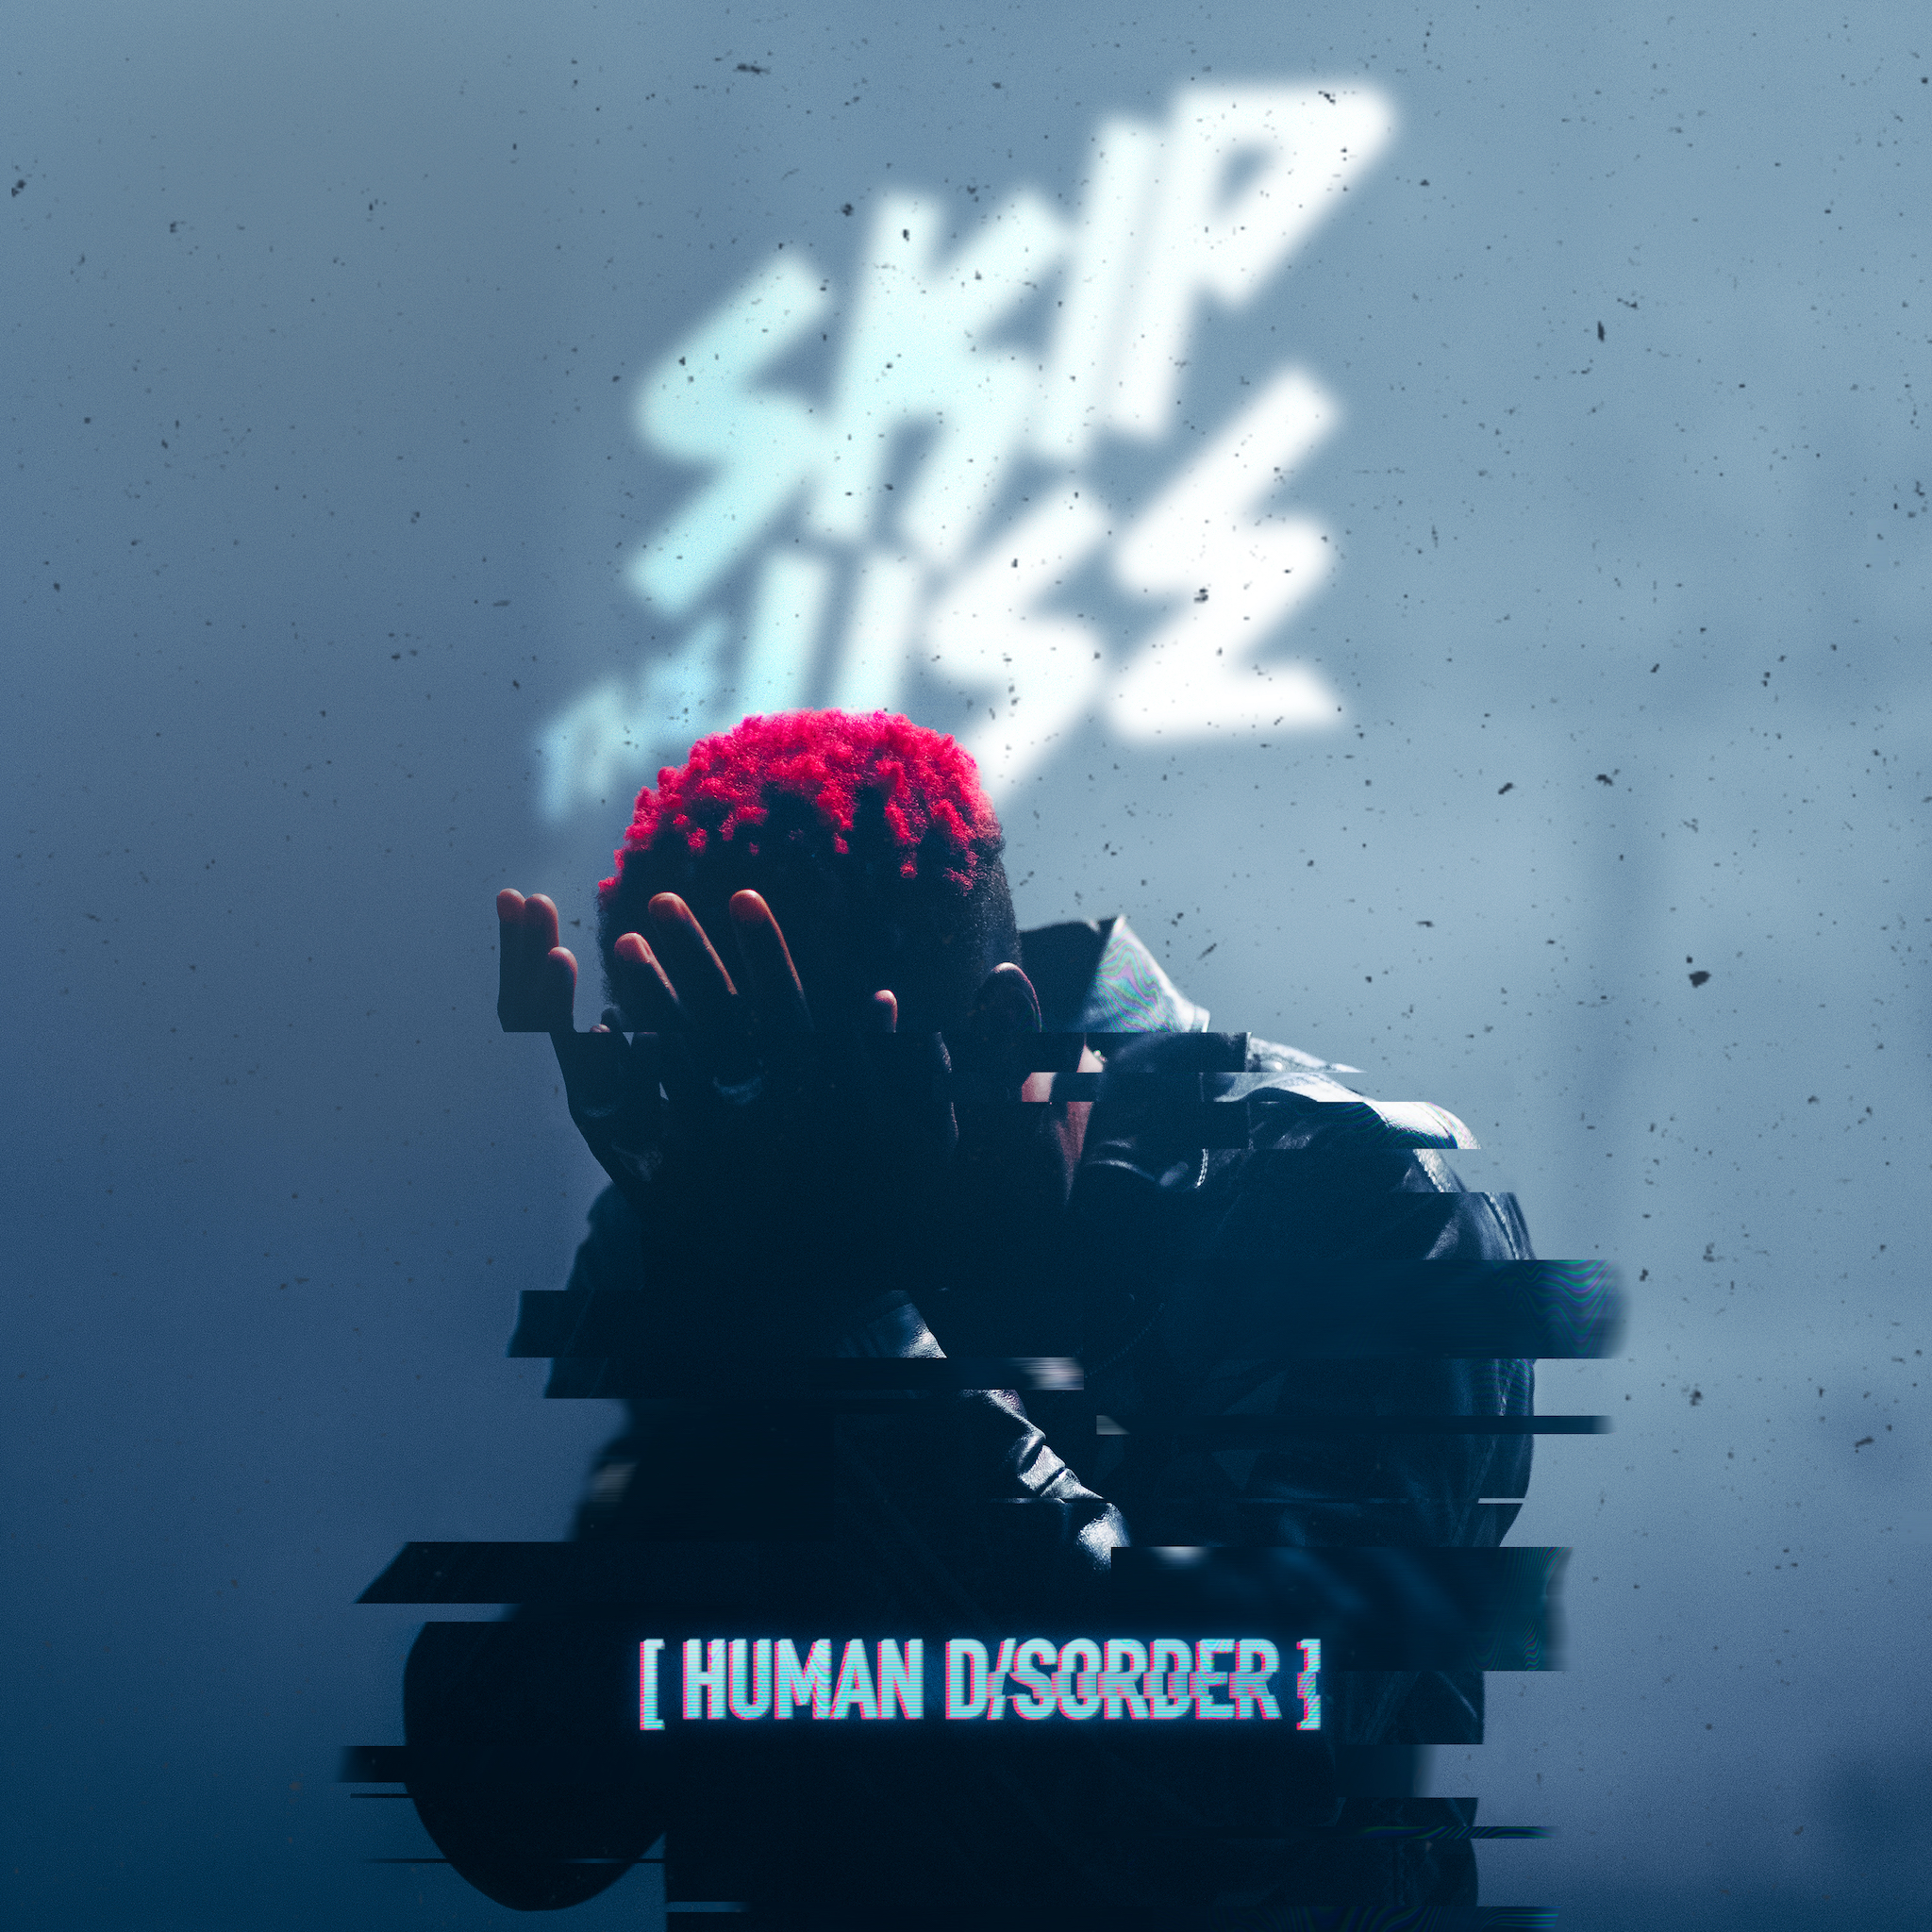 Skip The USE album Human Disorder image pochette musique